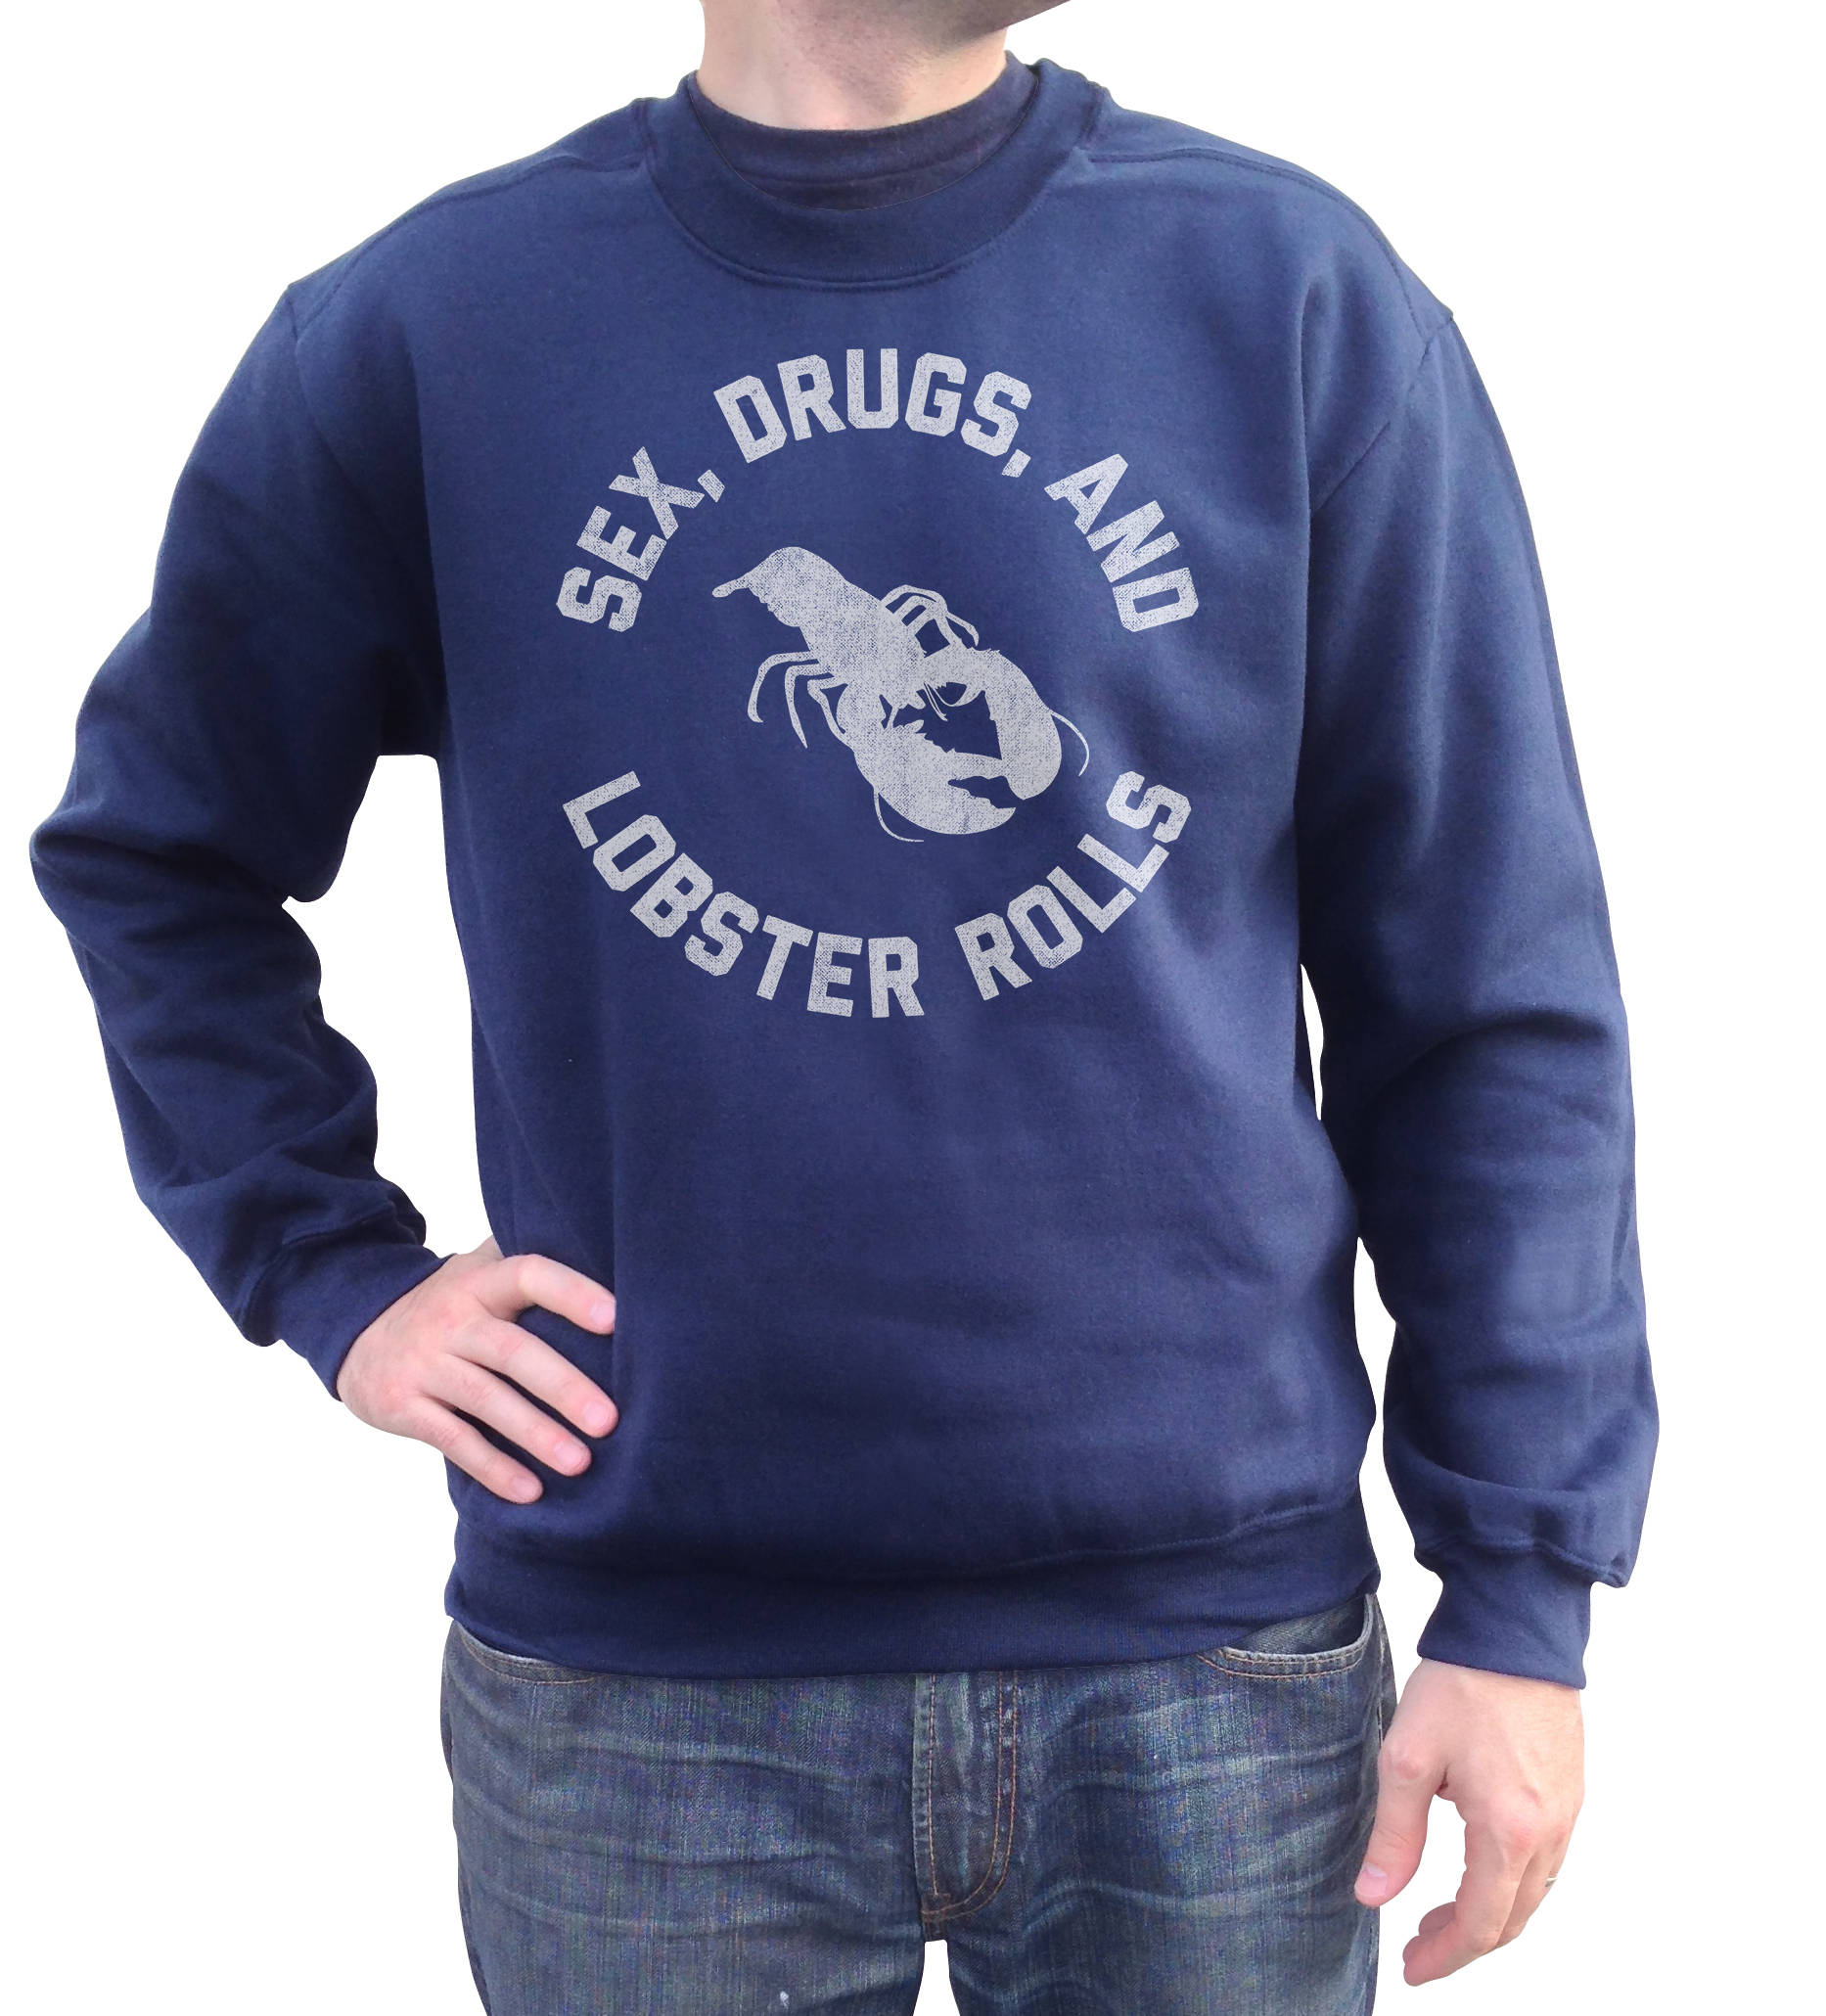 Unisex Sex Drugs and Lobster Rolls Sweatshirt